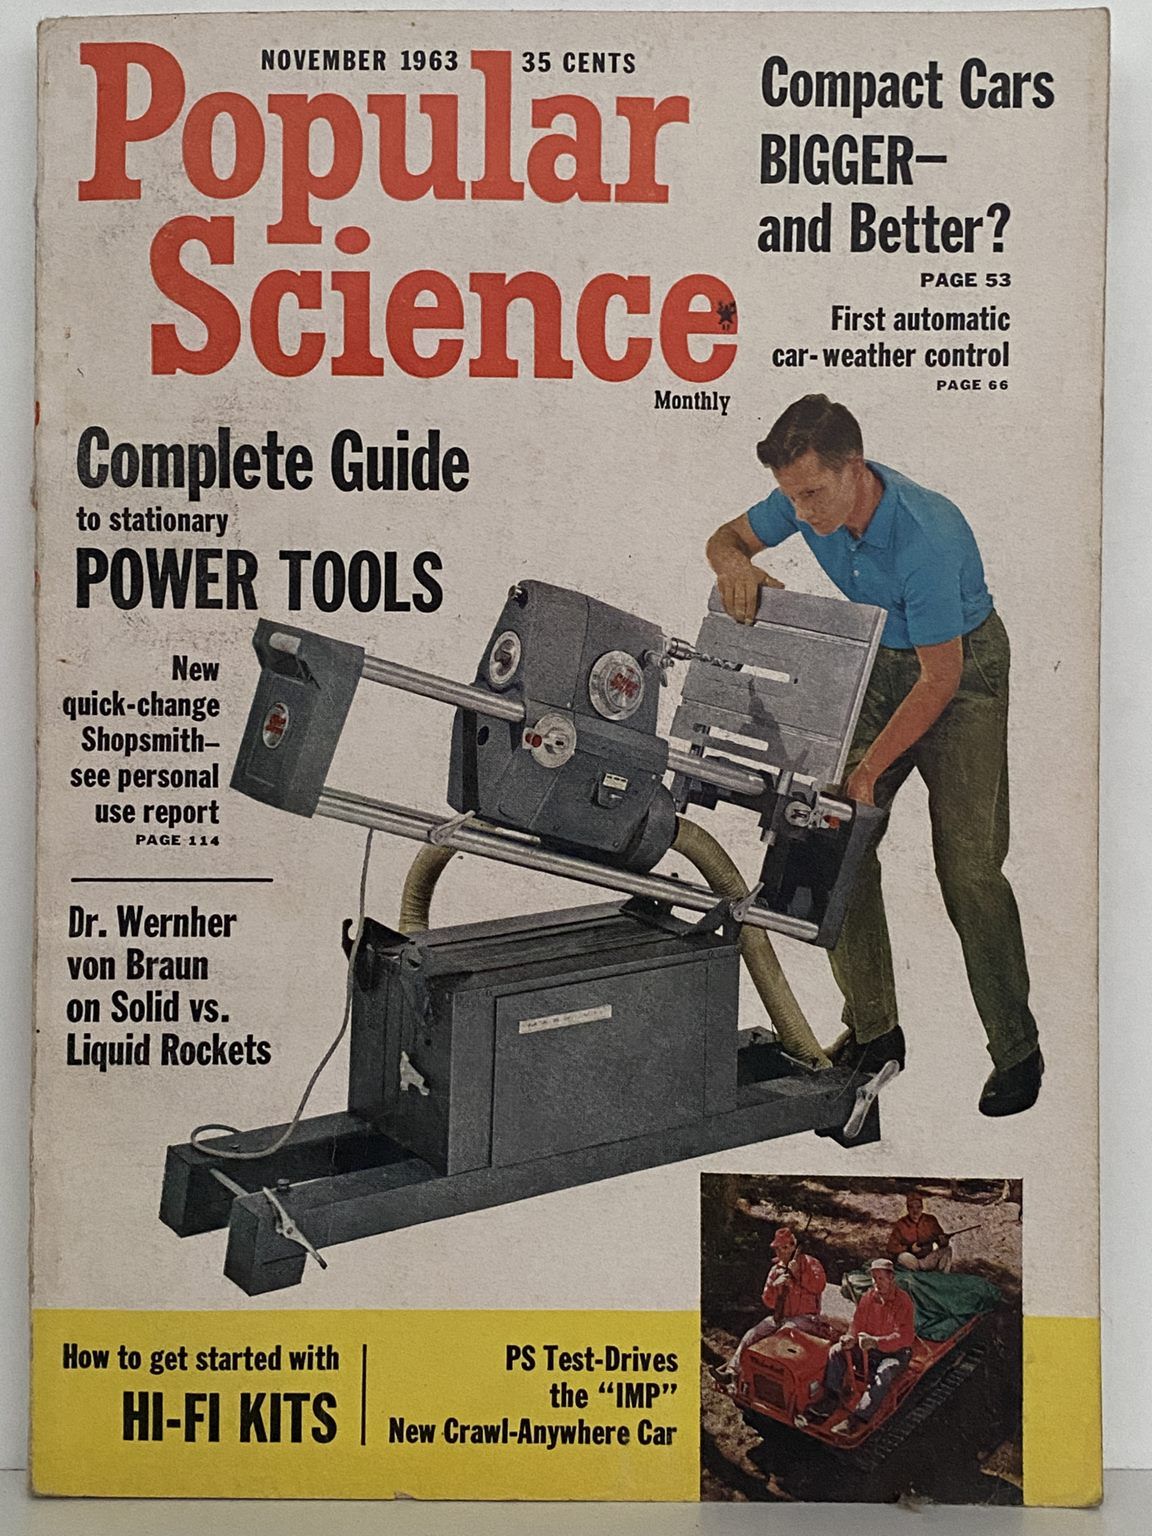 VINTAGE MAGAZINE: Popular Science, Vol. 183, No. 5 - November 1963